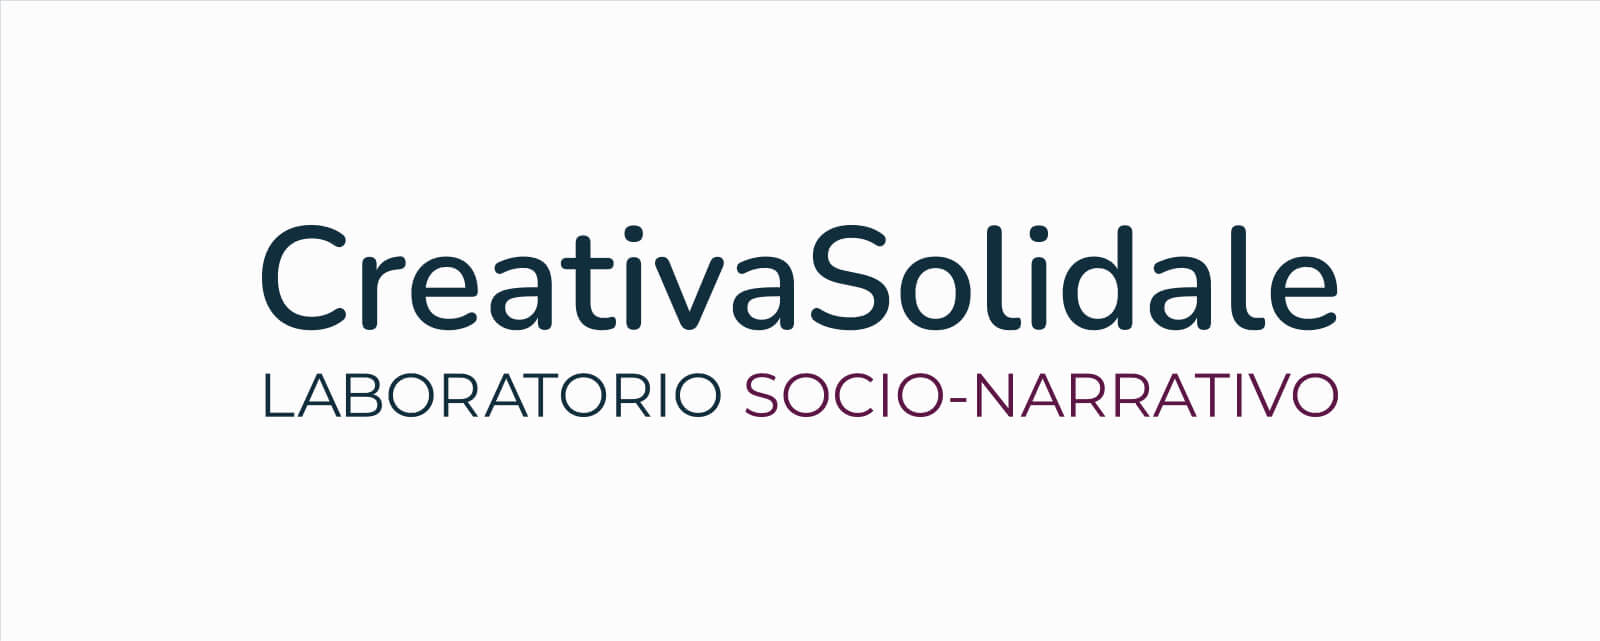 Logo Creativa Solidale - Chiara Casablanca